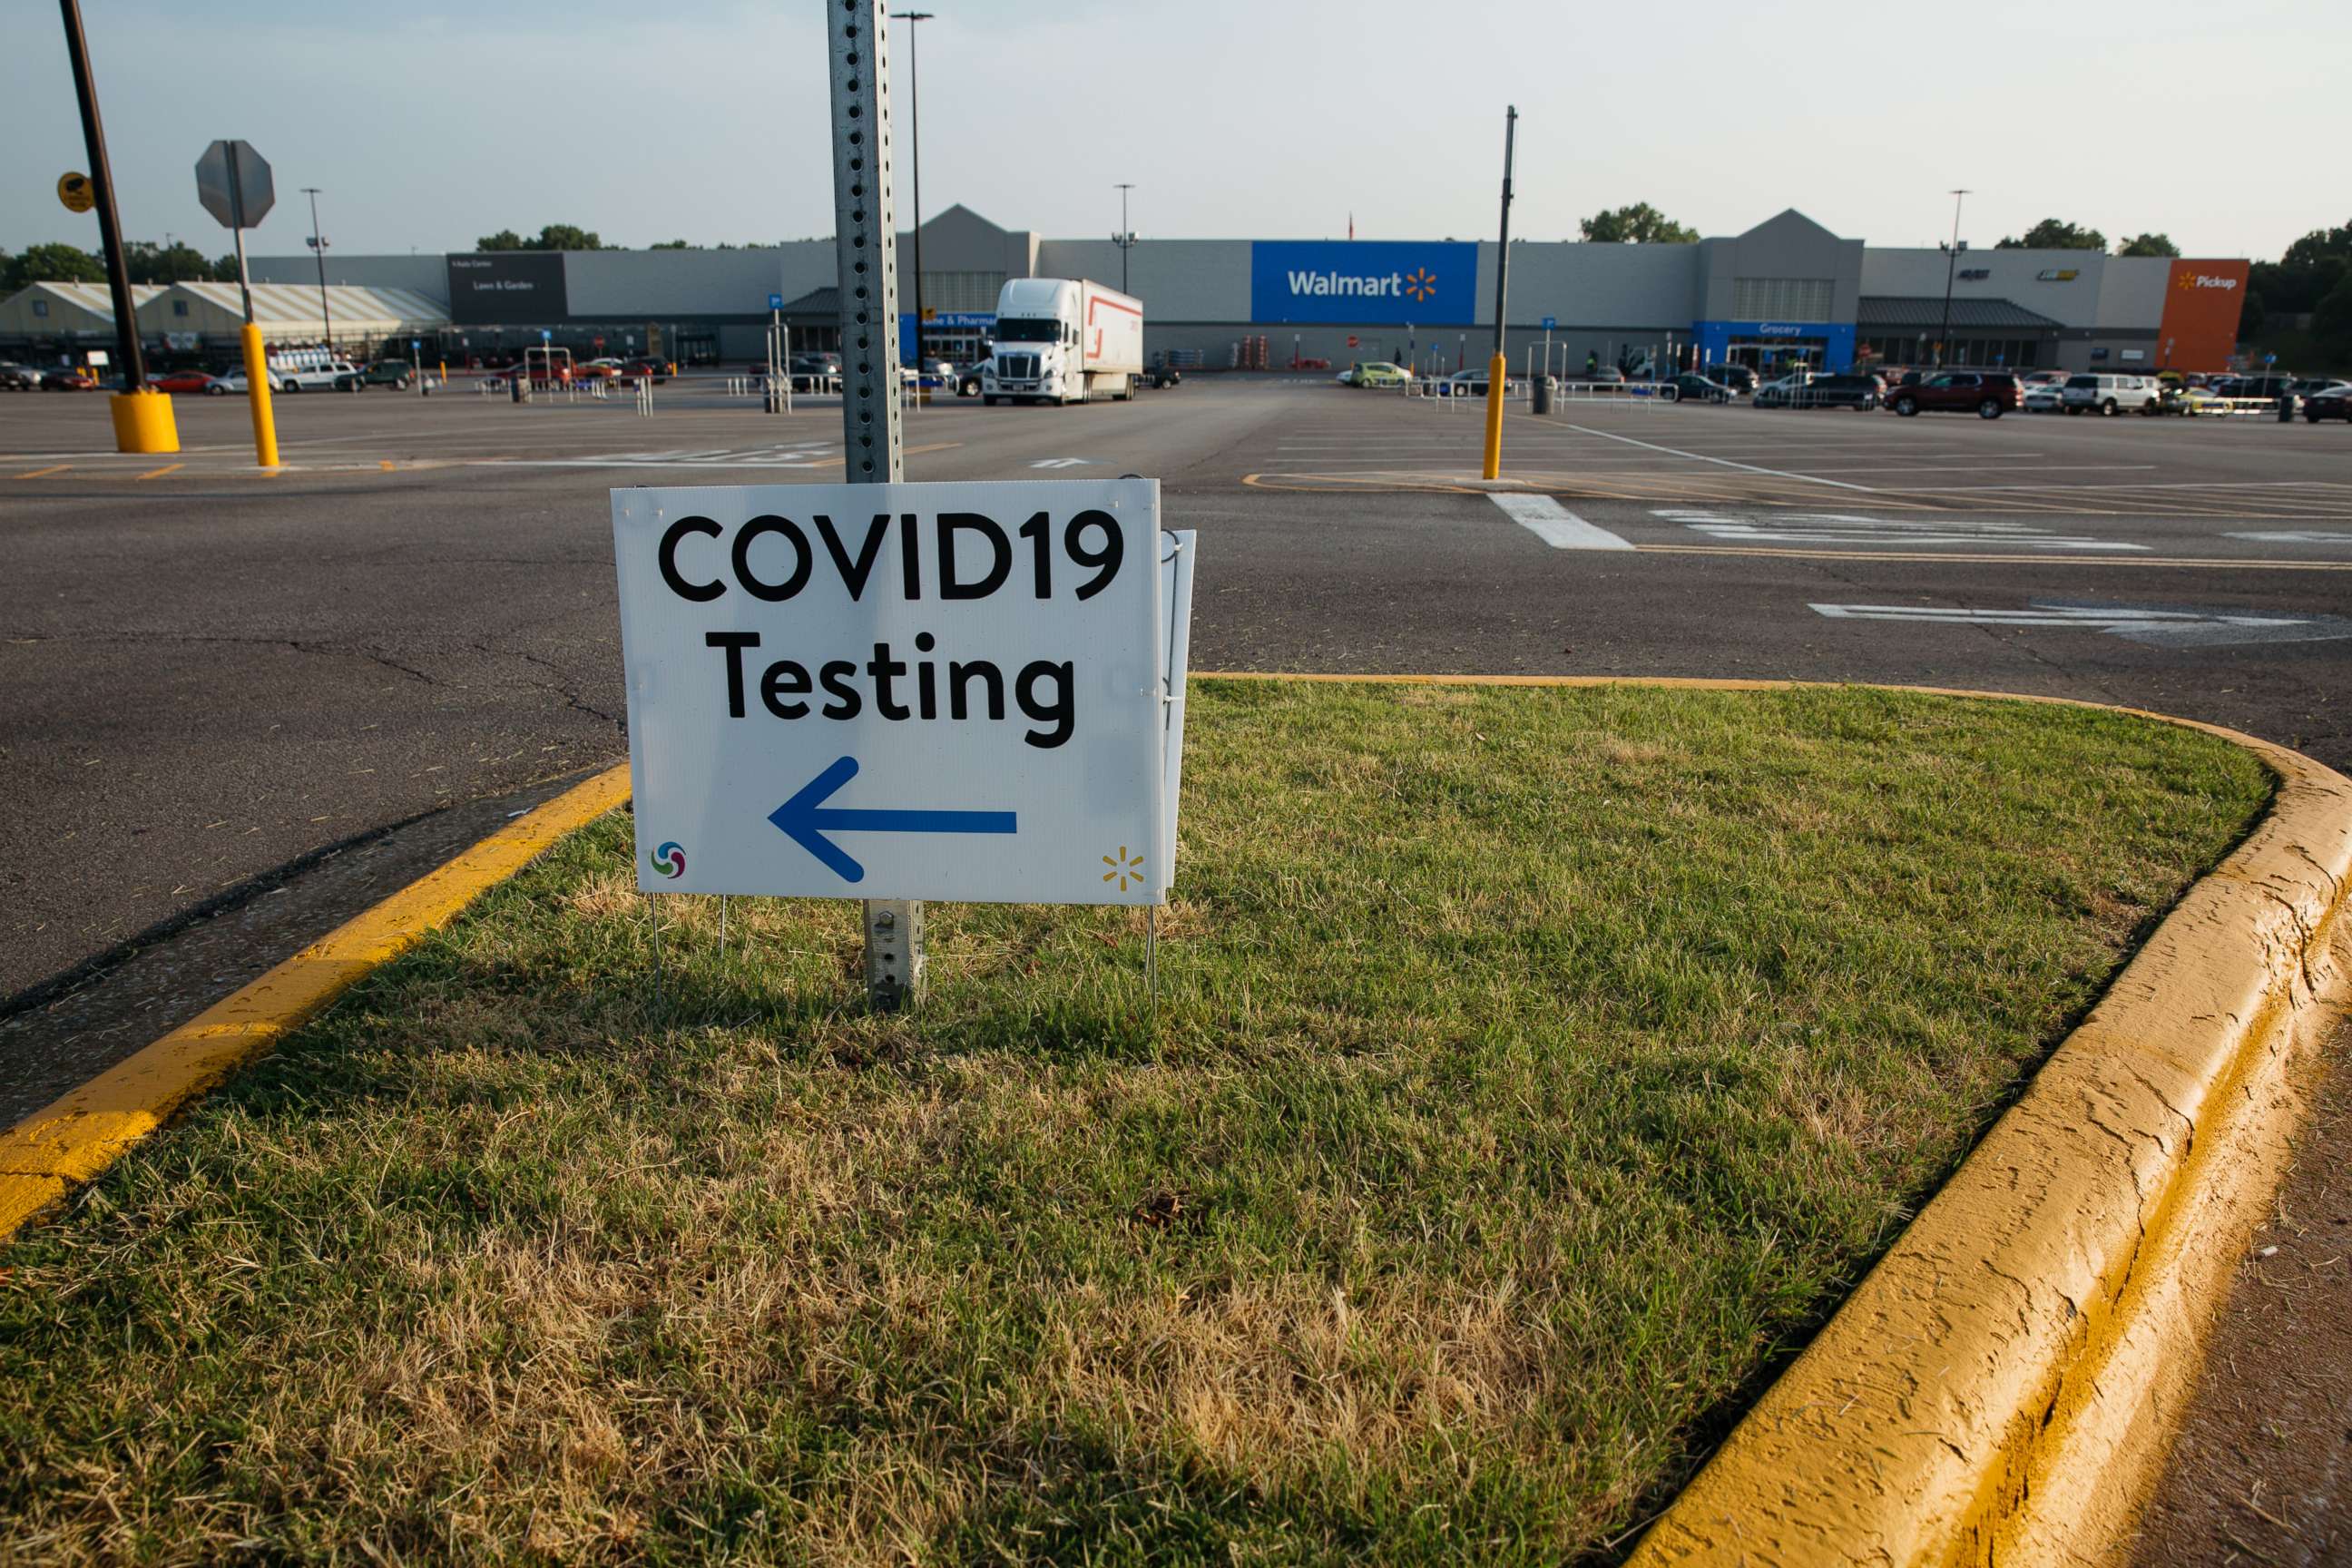 PHOTO: Covid-19 testing site at the Walmart Supercenter in Joplin, Missouri, July 2, 2020.